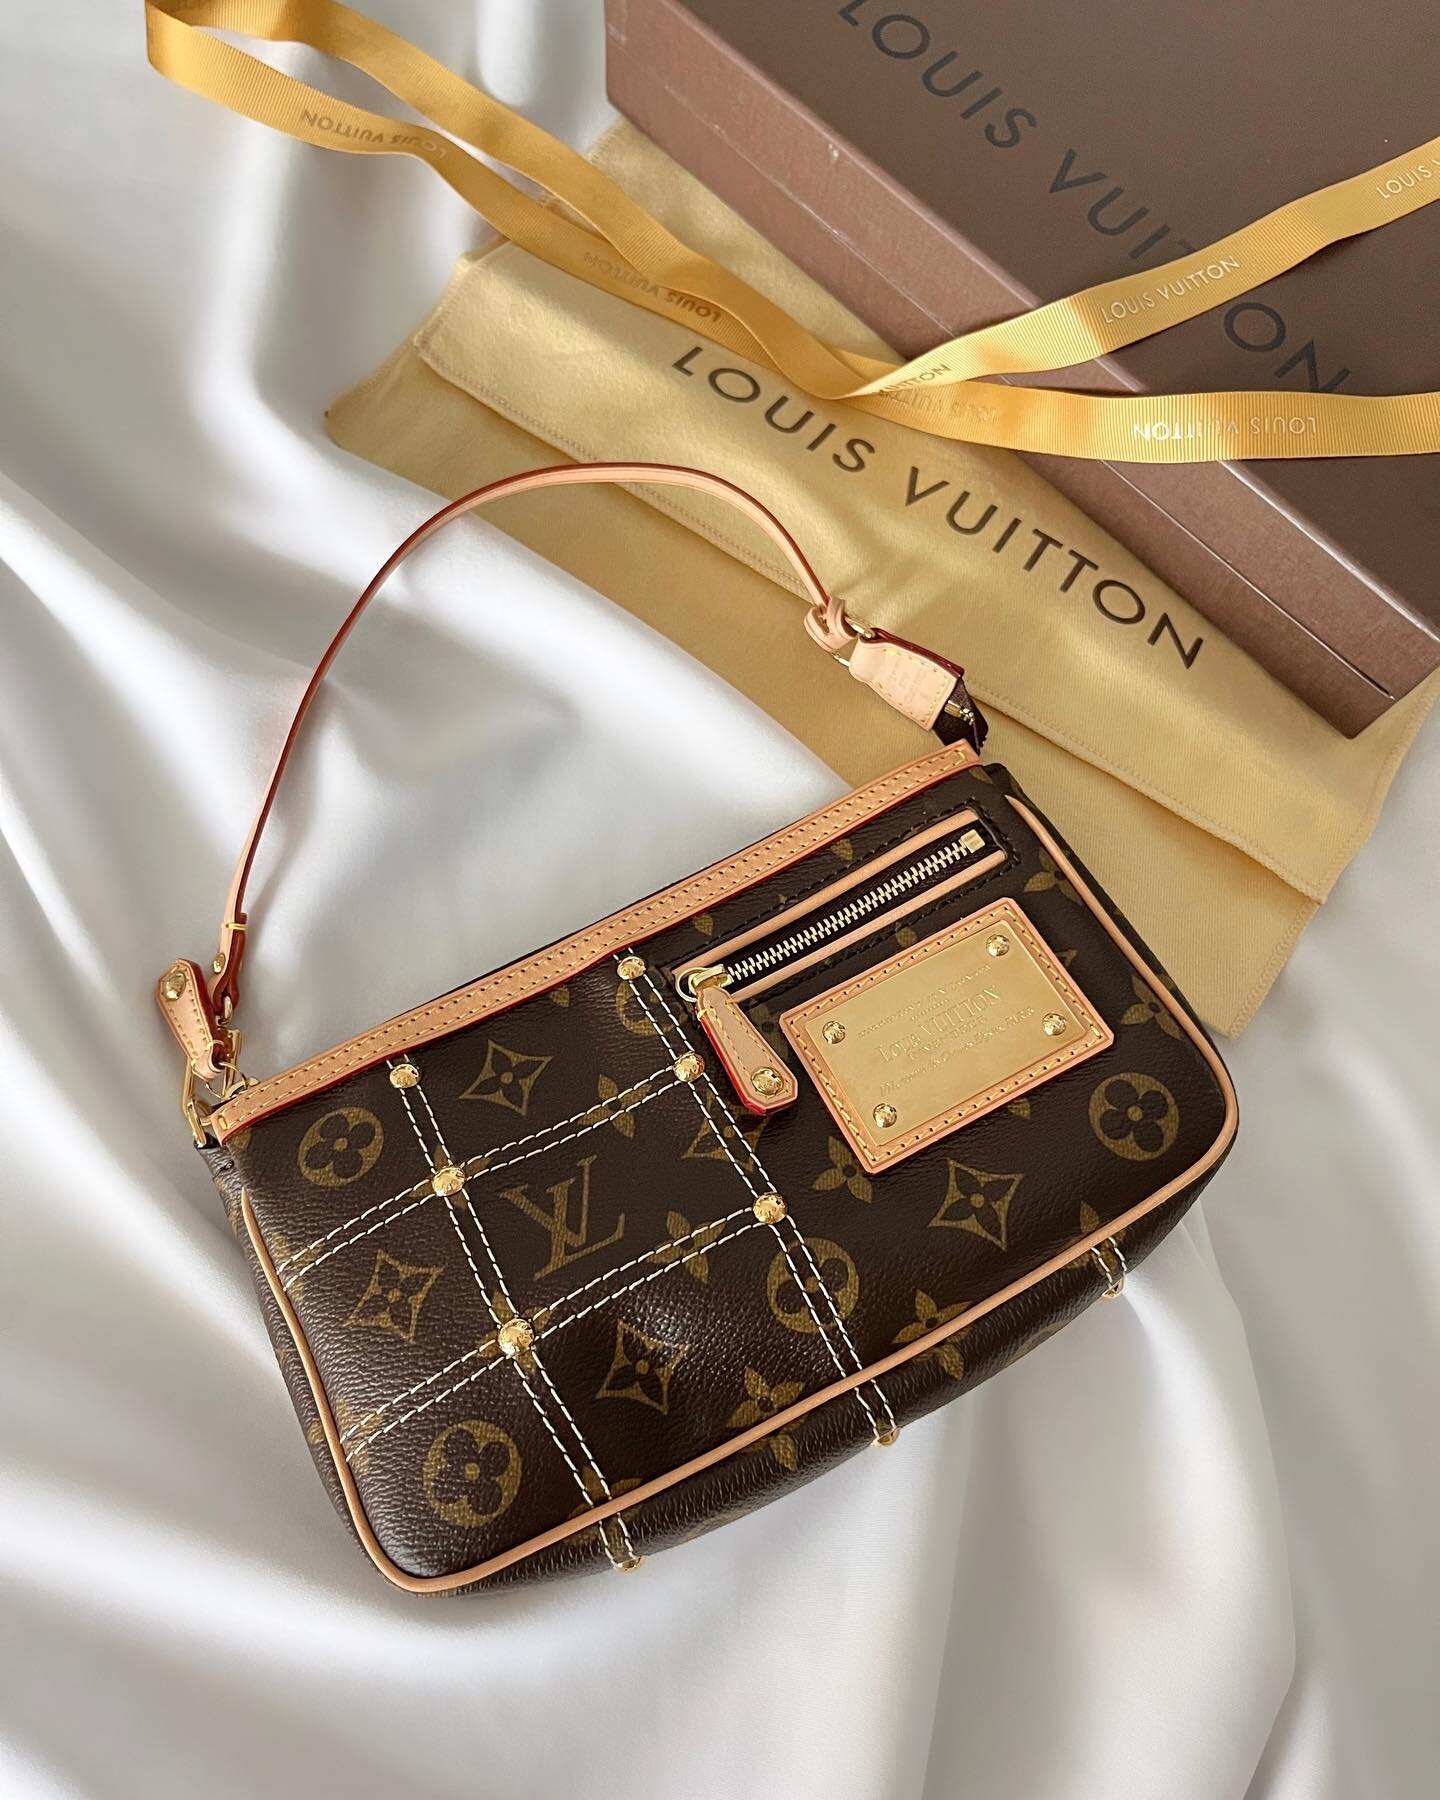 Louis Vuitton Riveting Pochette Accessoires

Now Available
Link in bio